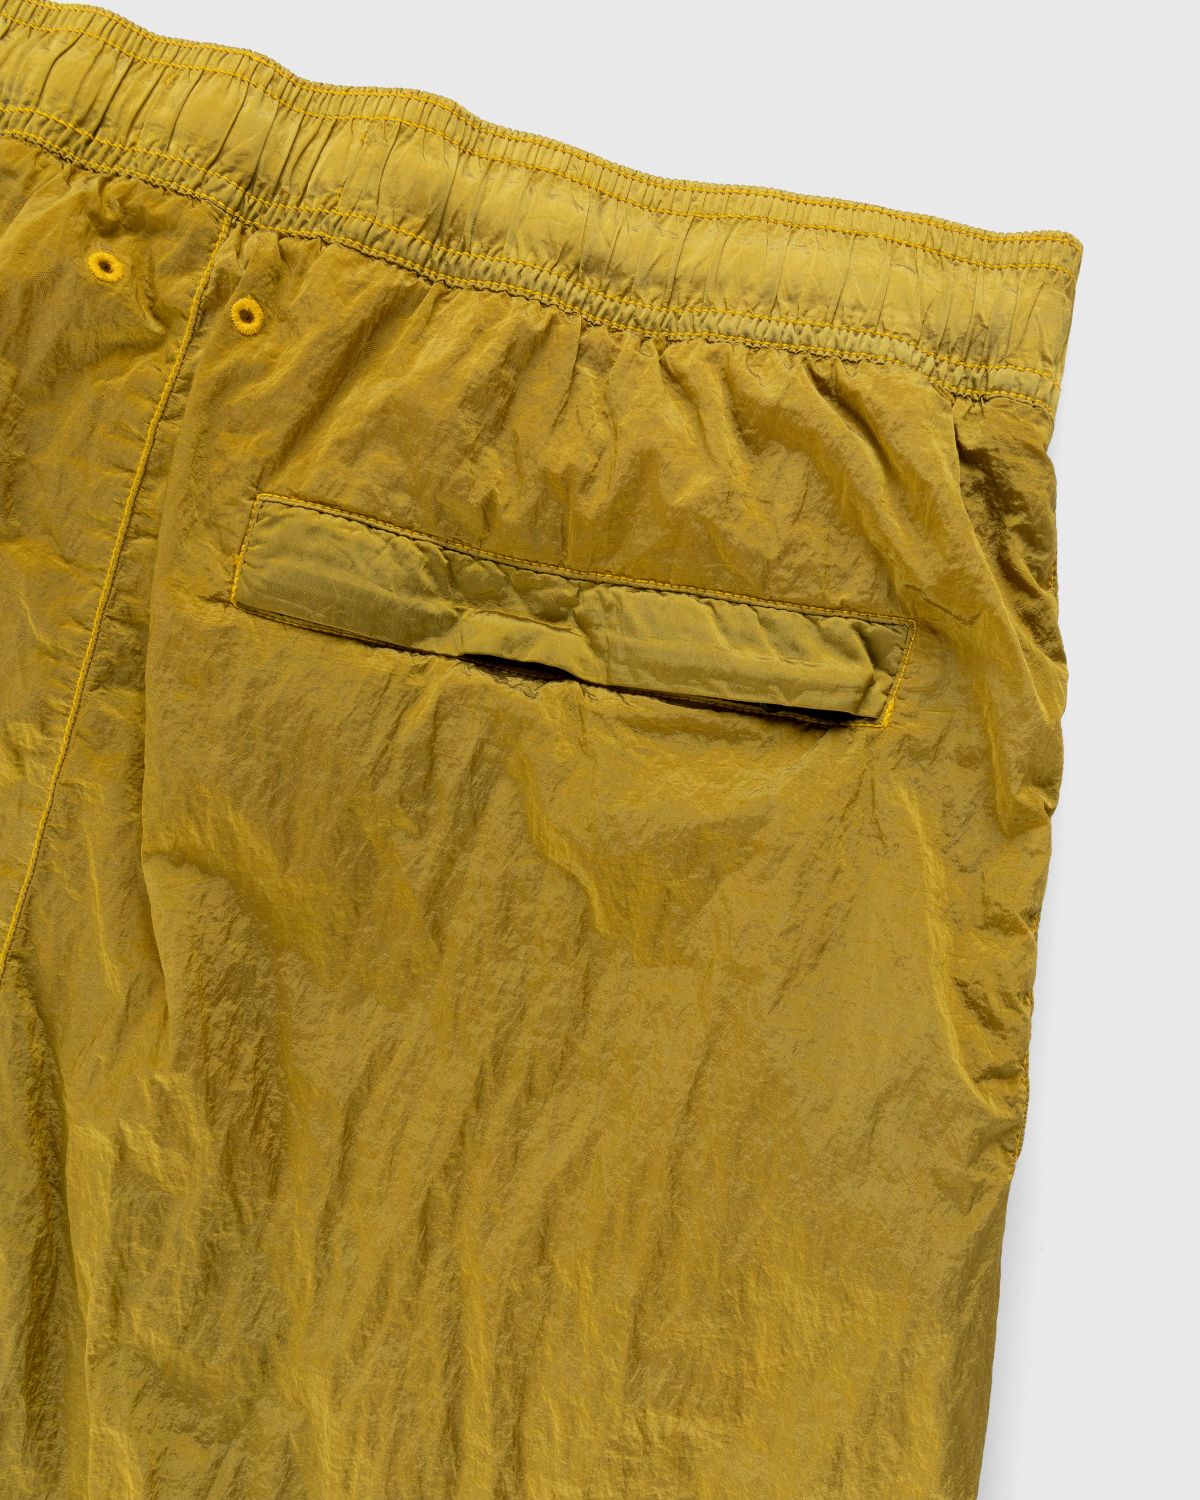 Stone Island – Nylon Metal Swim Shorts Yellow - Swim Shorts - Yellow - Image 4